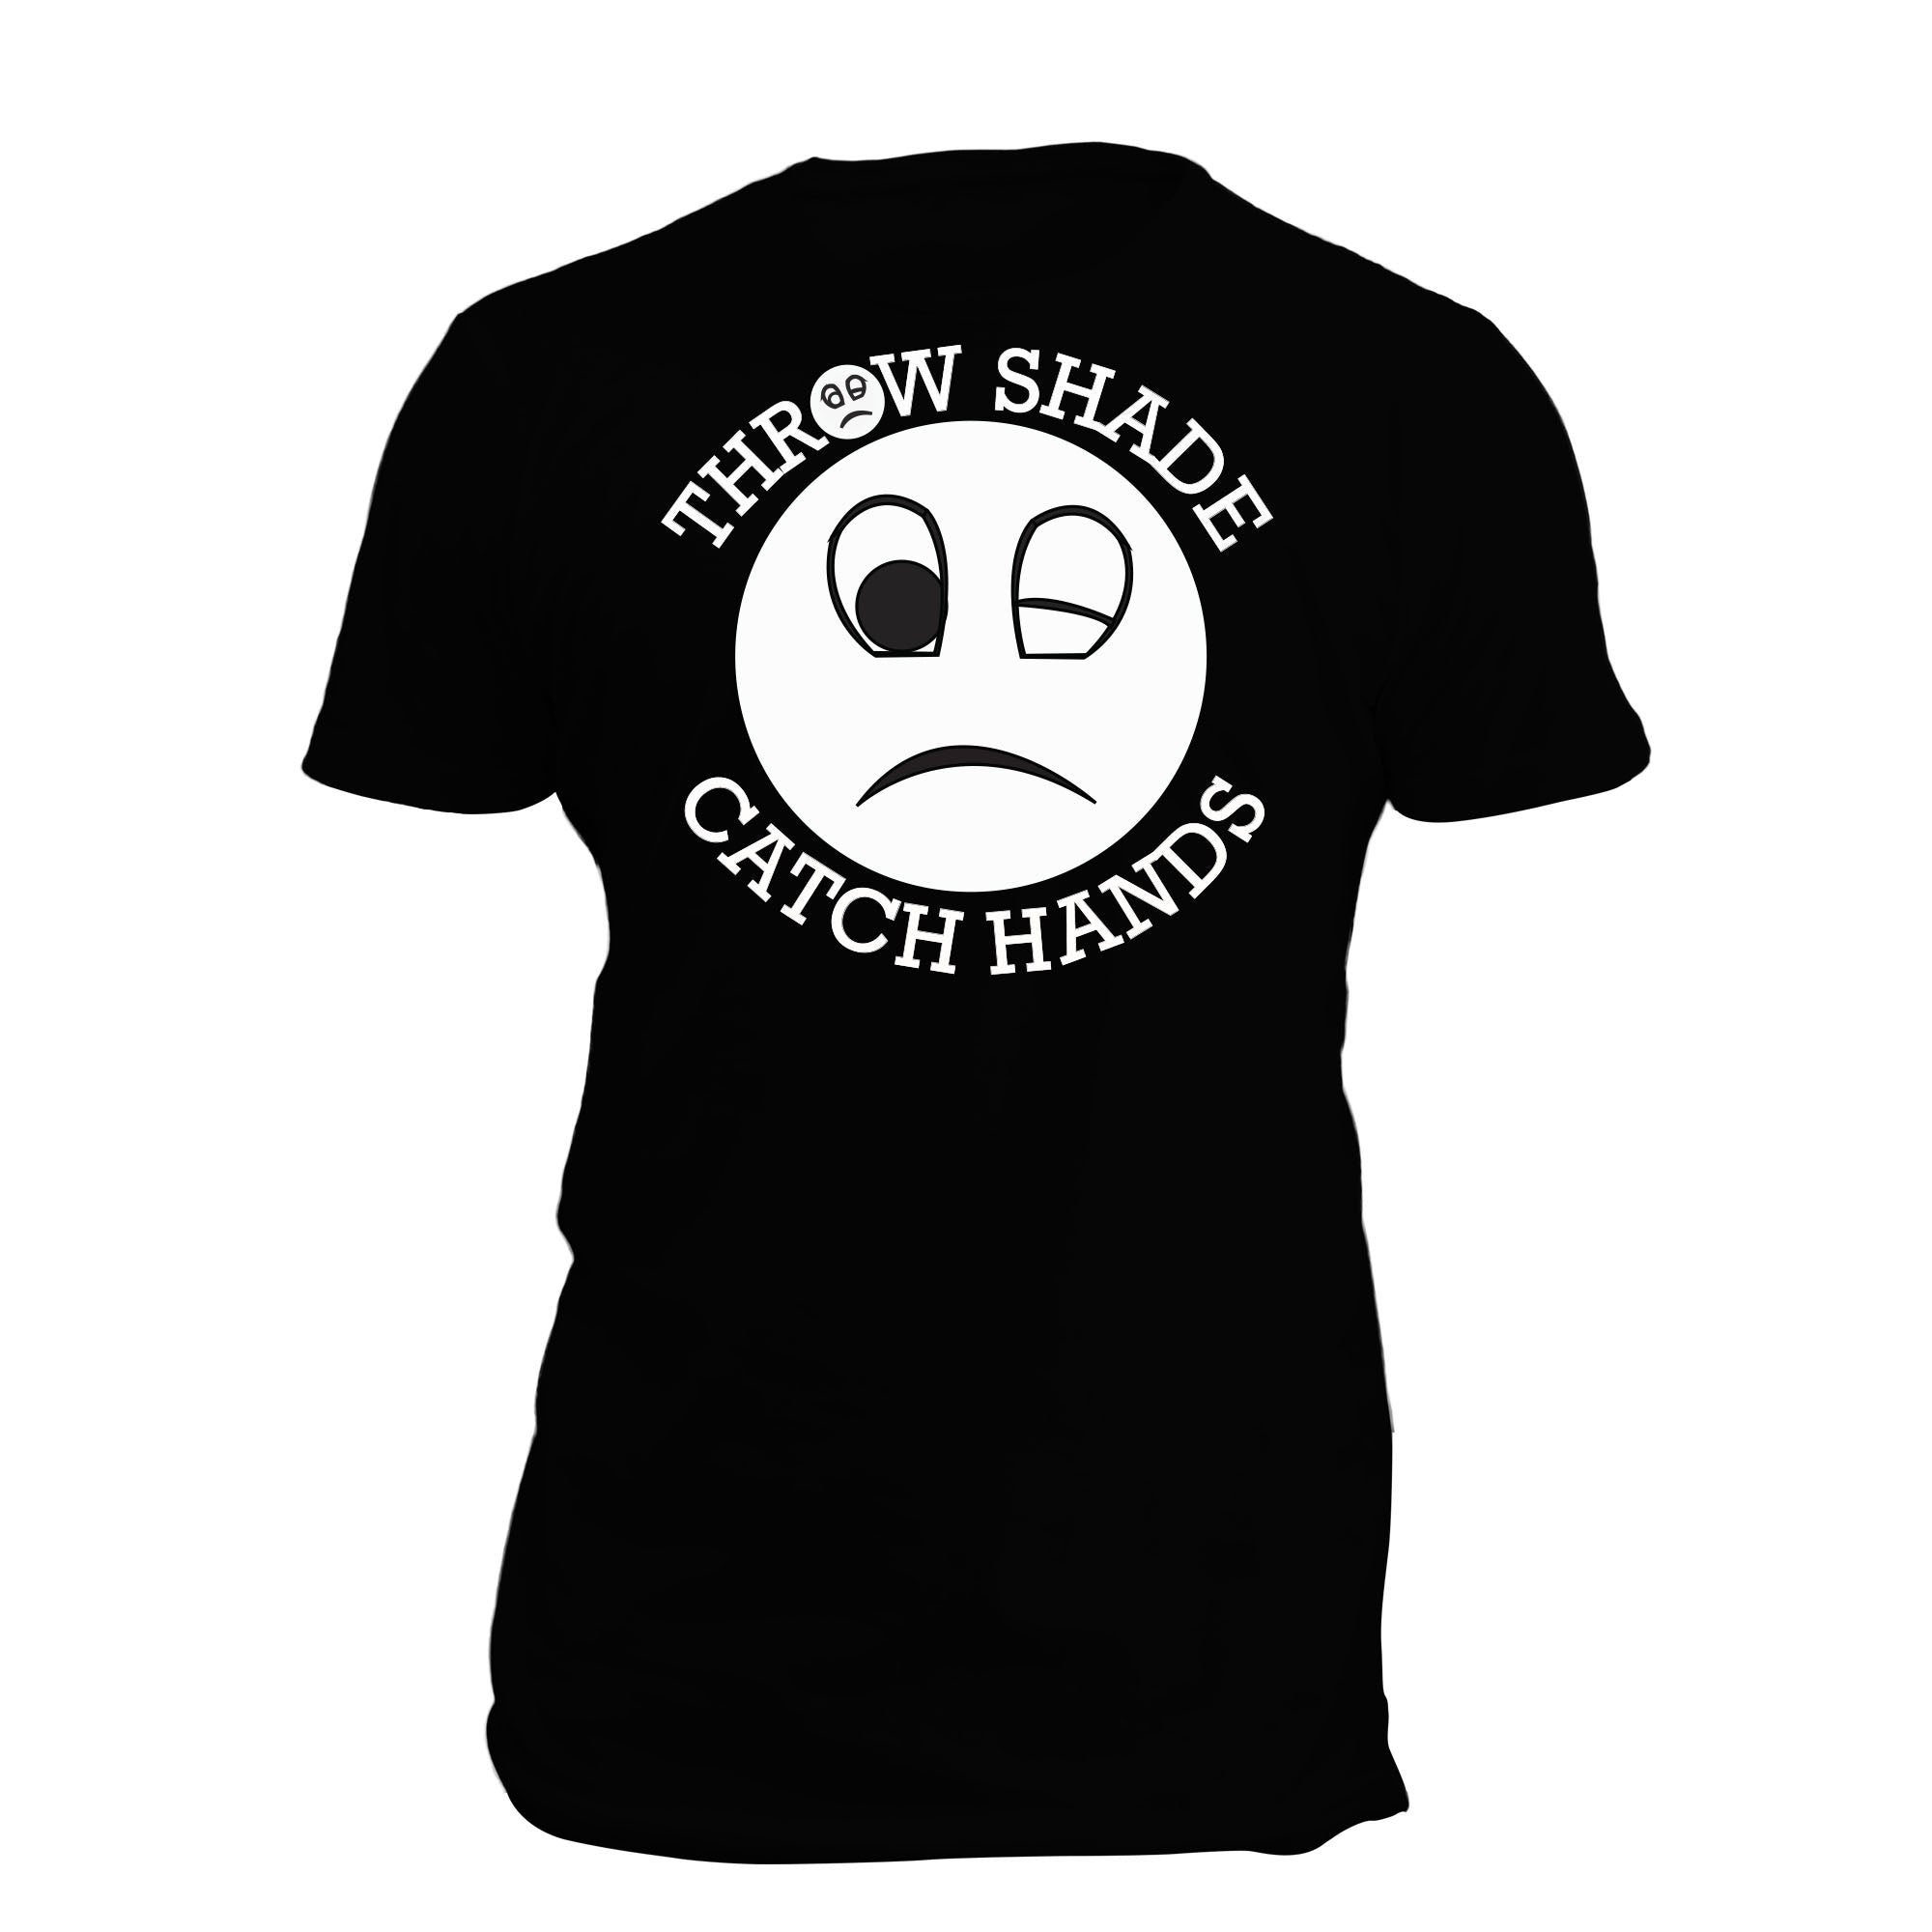 Throw Shade Catch Hands 2 SS Full T Shirt Black